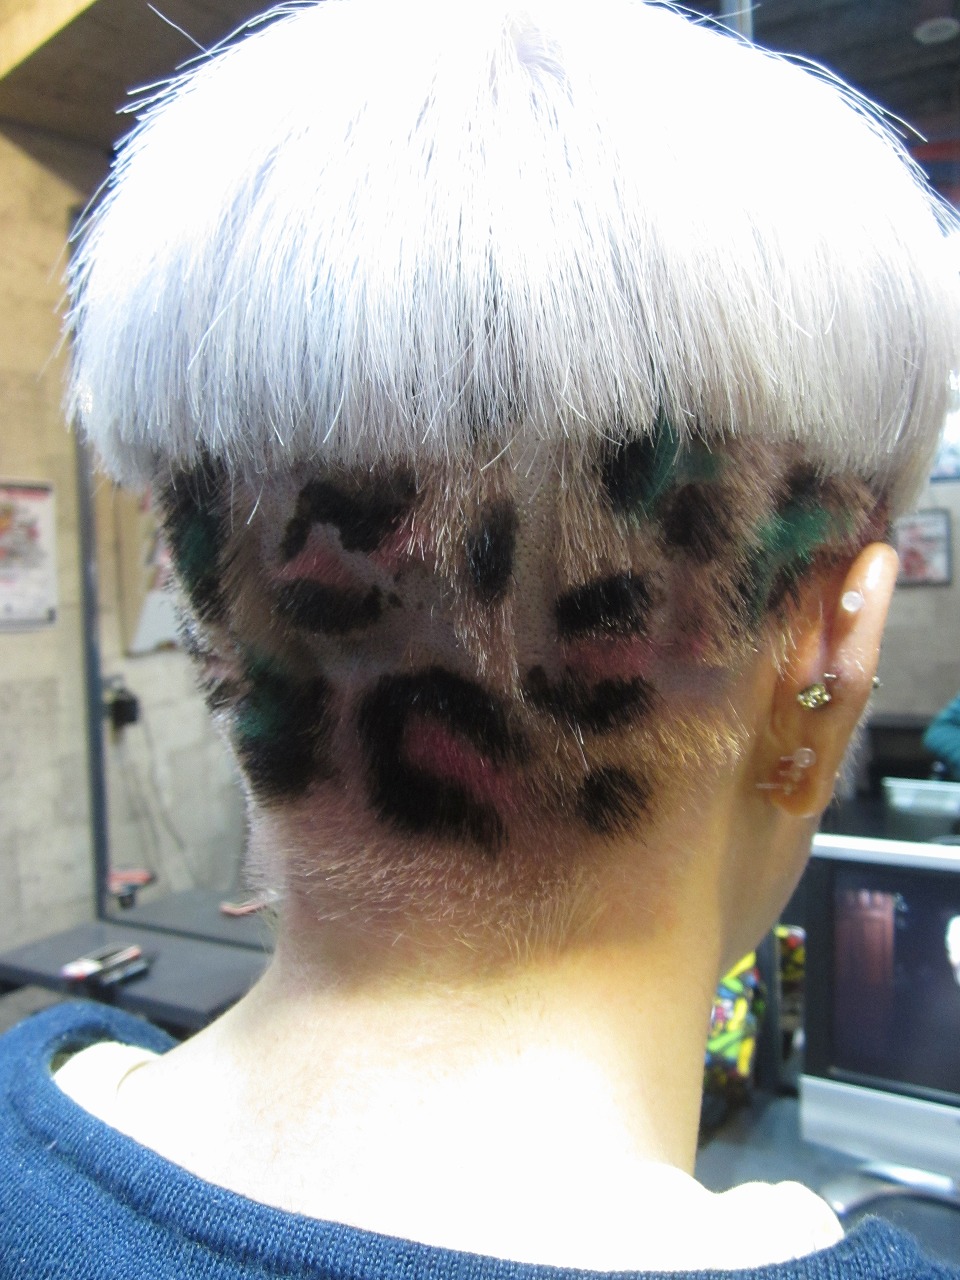 Gドラゴンヘアスタイル 刈り上げ豹柄 Trick Storeのヘアスタイル ヘアログ